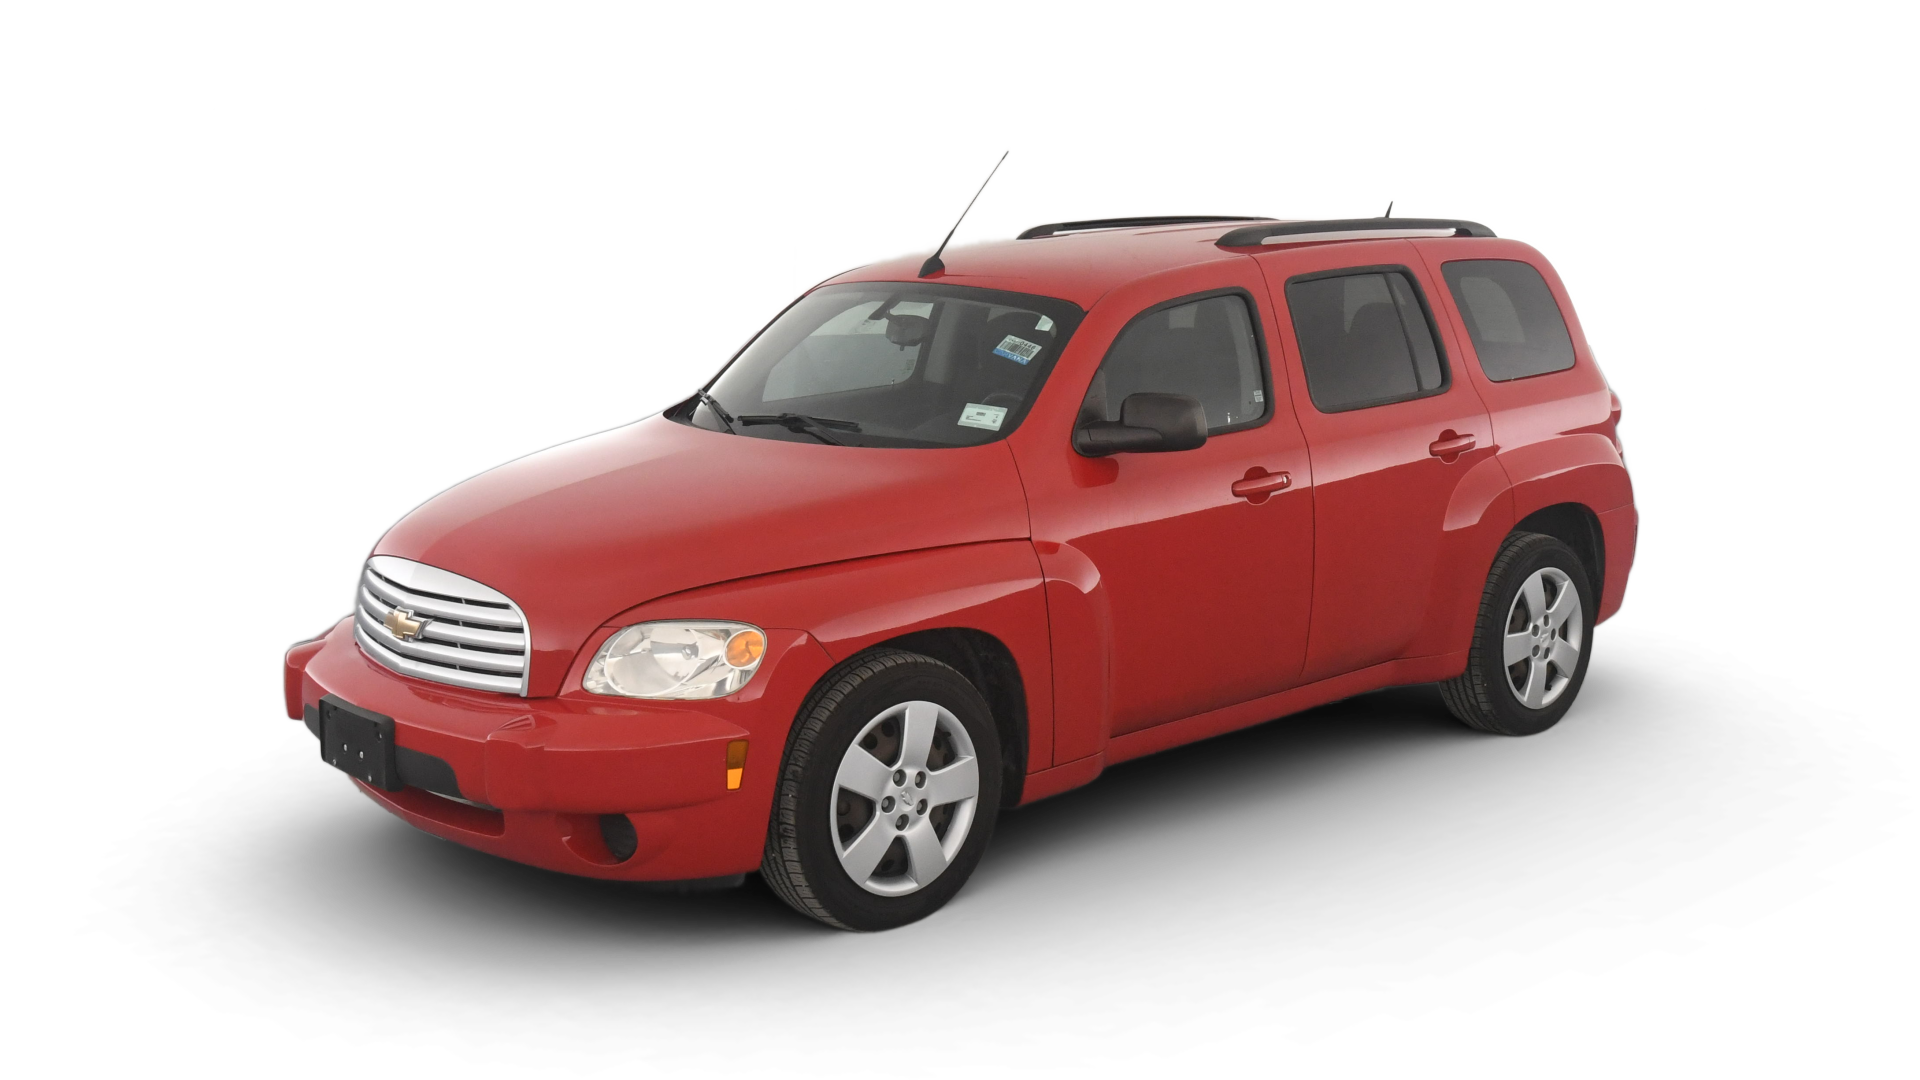 Used Chevrolet HHR For Sale Online | Carvana